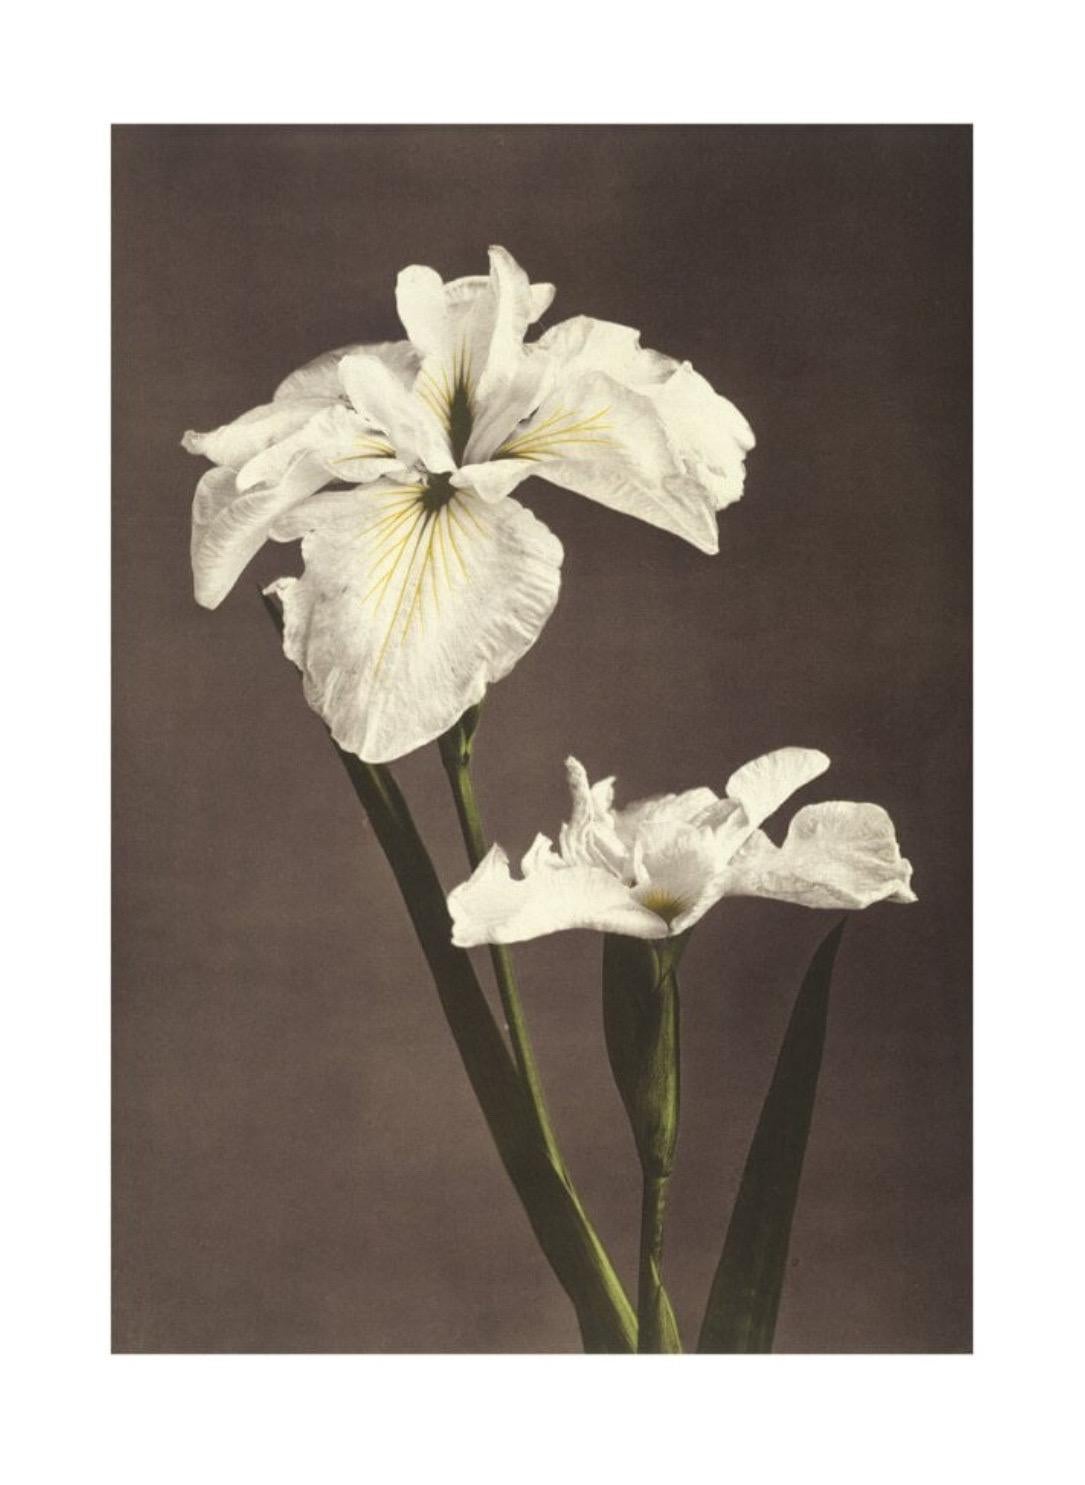 Ogawa Kazumasa, Iris Kæmpferi, from Some Japanese Flowers